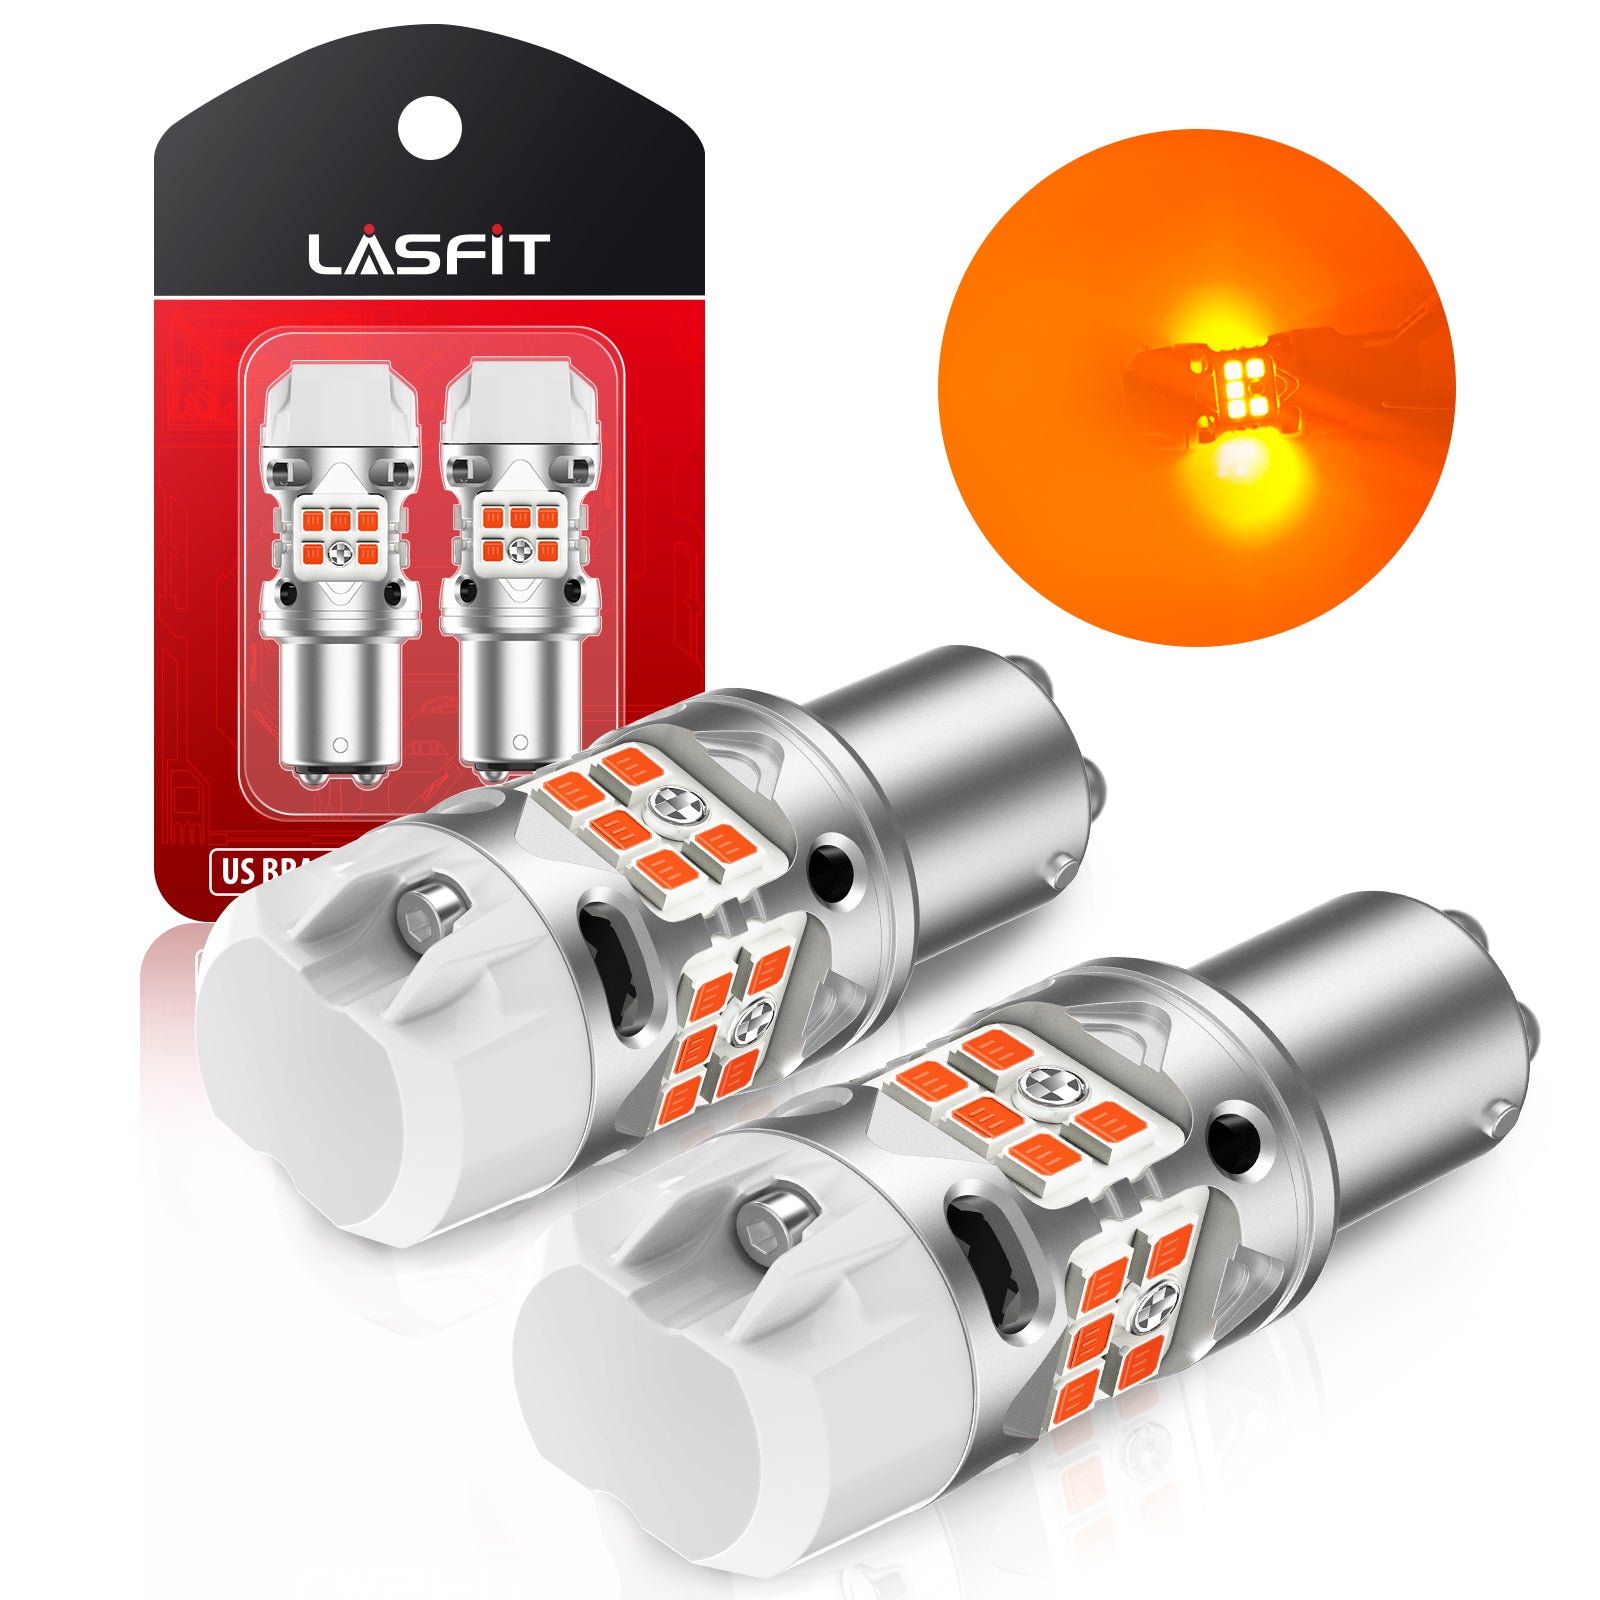 Lasfit 921 912 T15 Canbus Error Free LED Reverse Back Up Light Bulb, White Light, New Upgrade Design,2 Pack